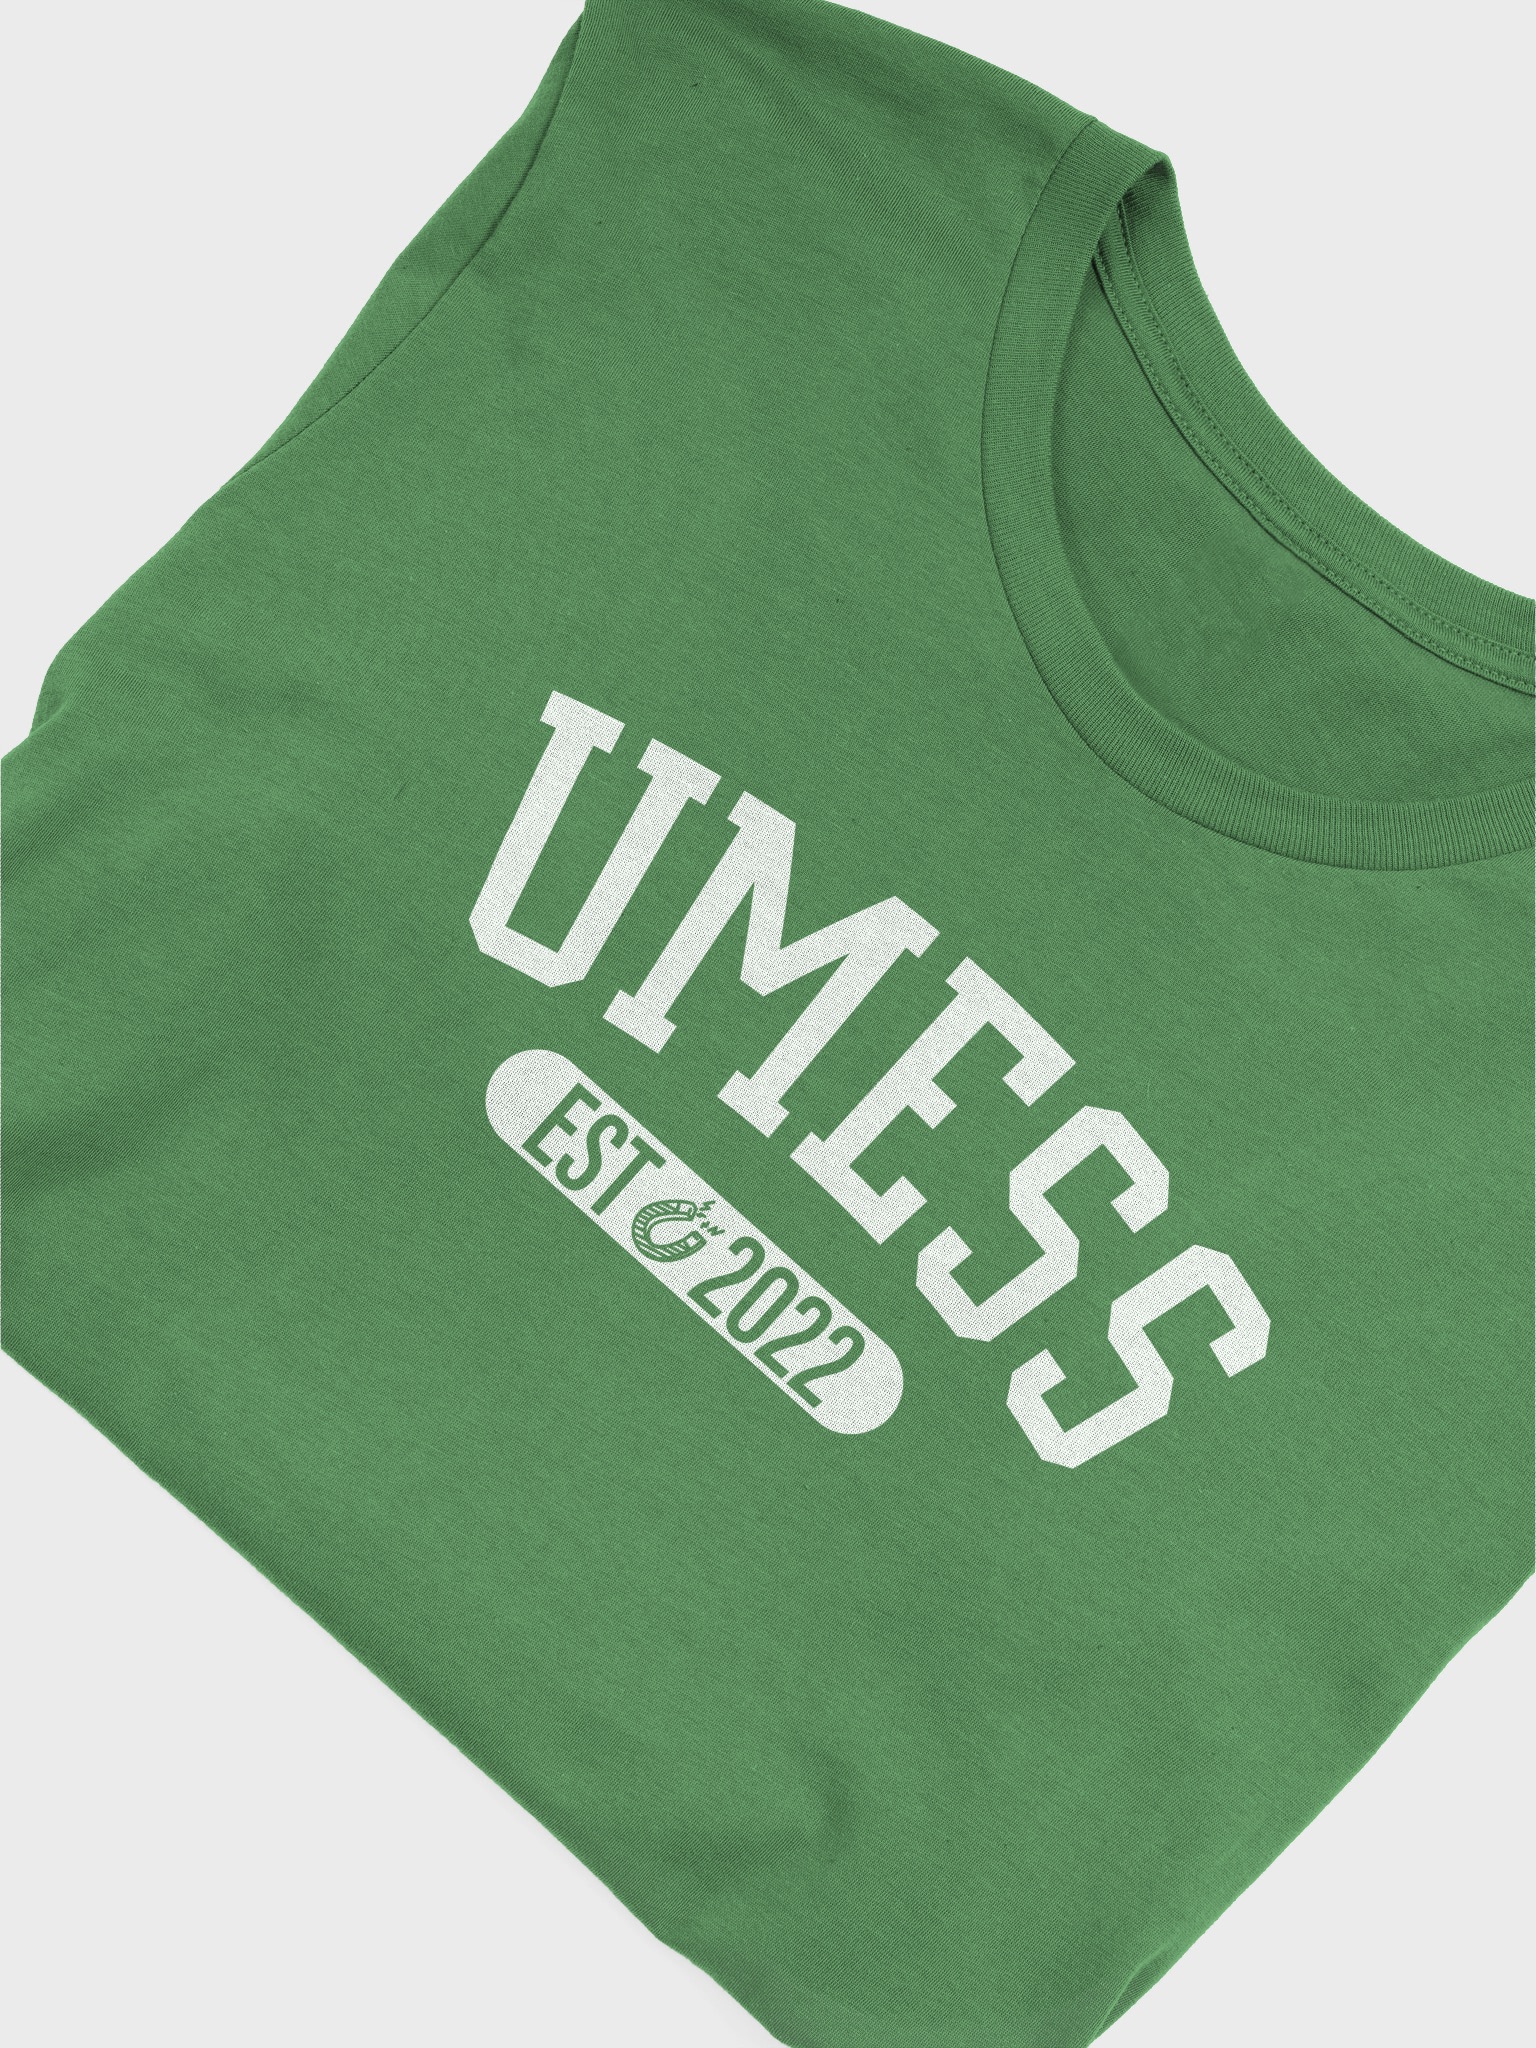 Mess Magnets UMESS (White) - Unisex Super Soft Cotton T-Shirt